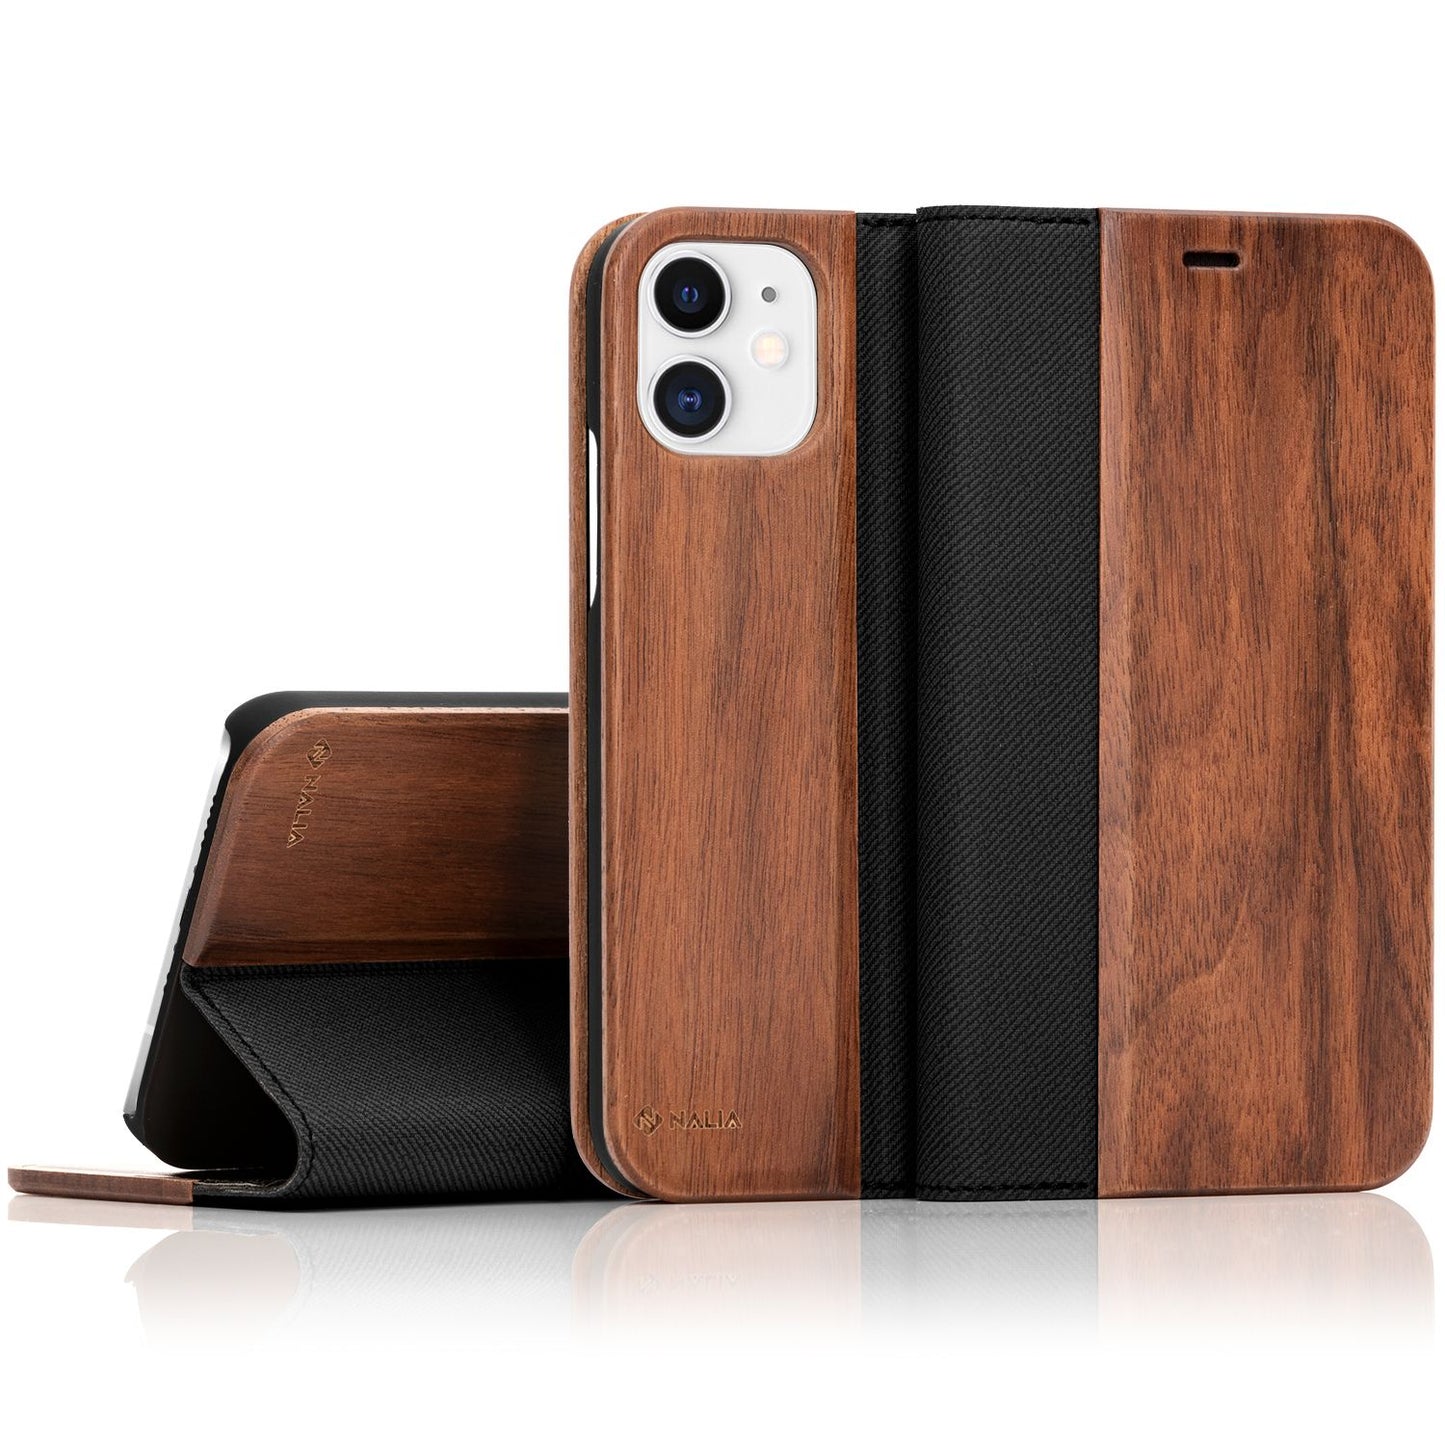 NALIA Echt Holz Flip Case für iPhone 12 Mini, Premium Wood Hülle Cover Bumper